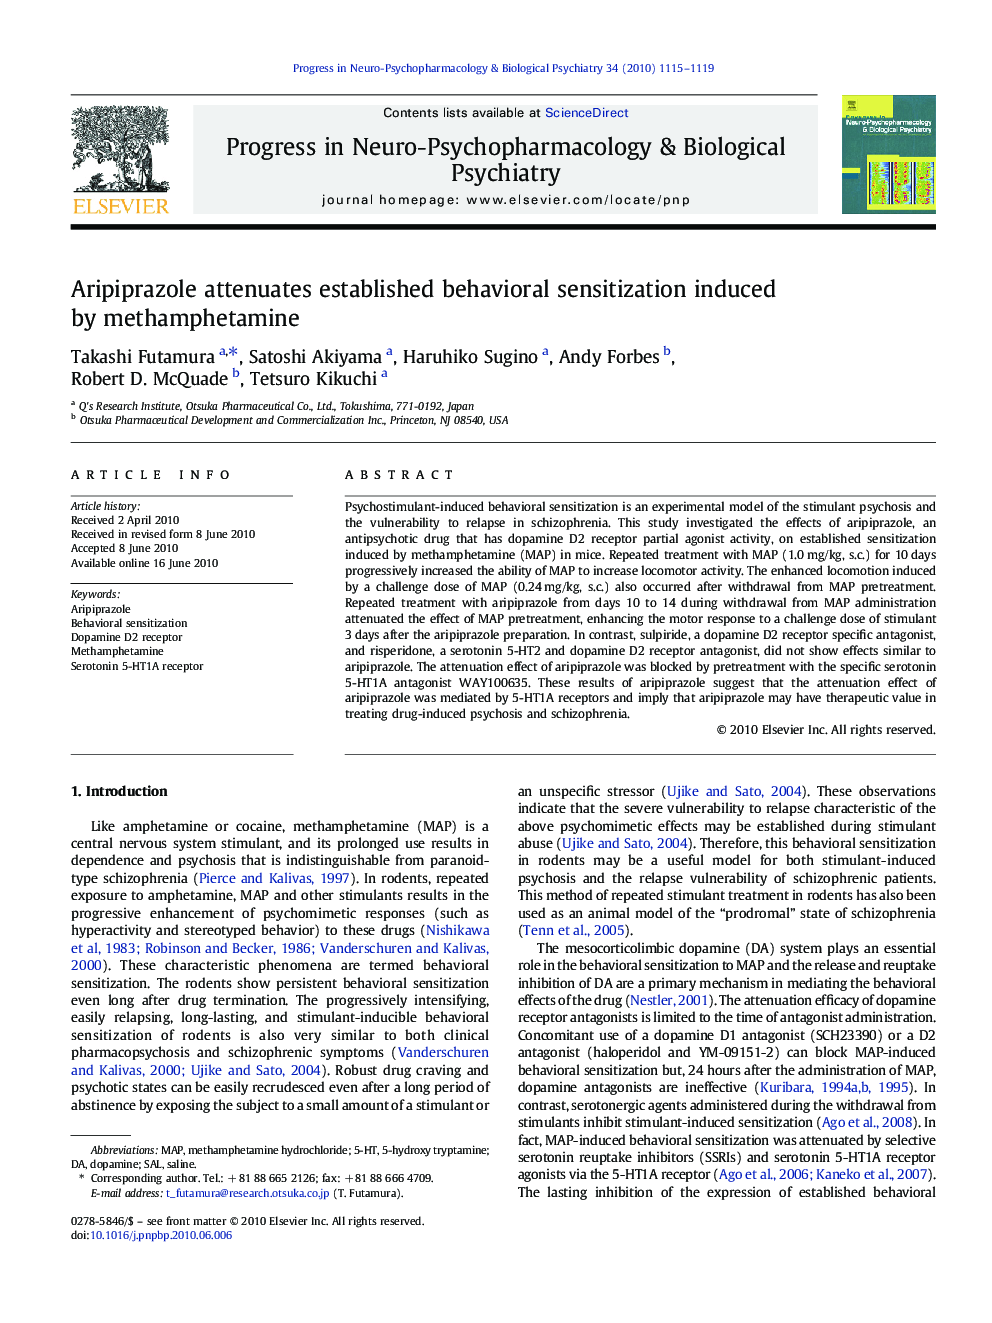 Aripiprazole attenuates established behavioral sensitization induced by methamphetamine